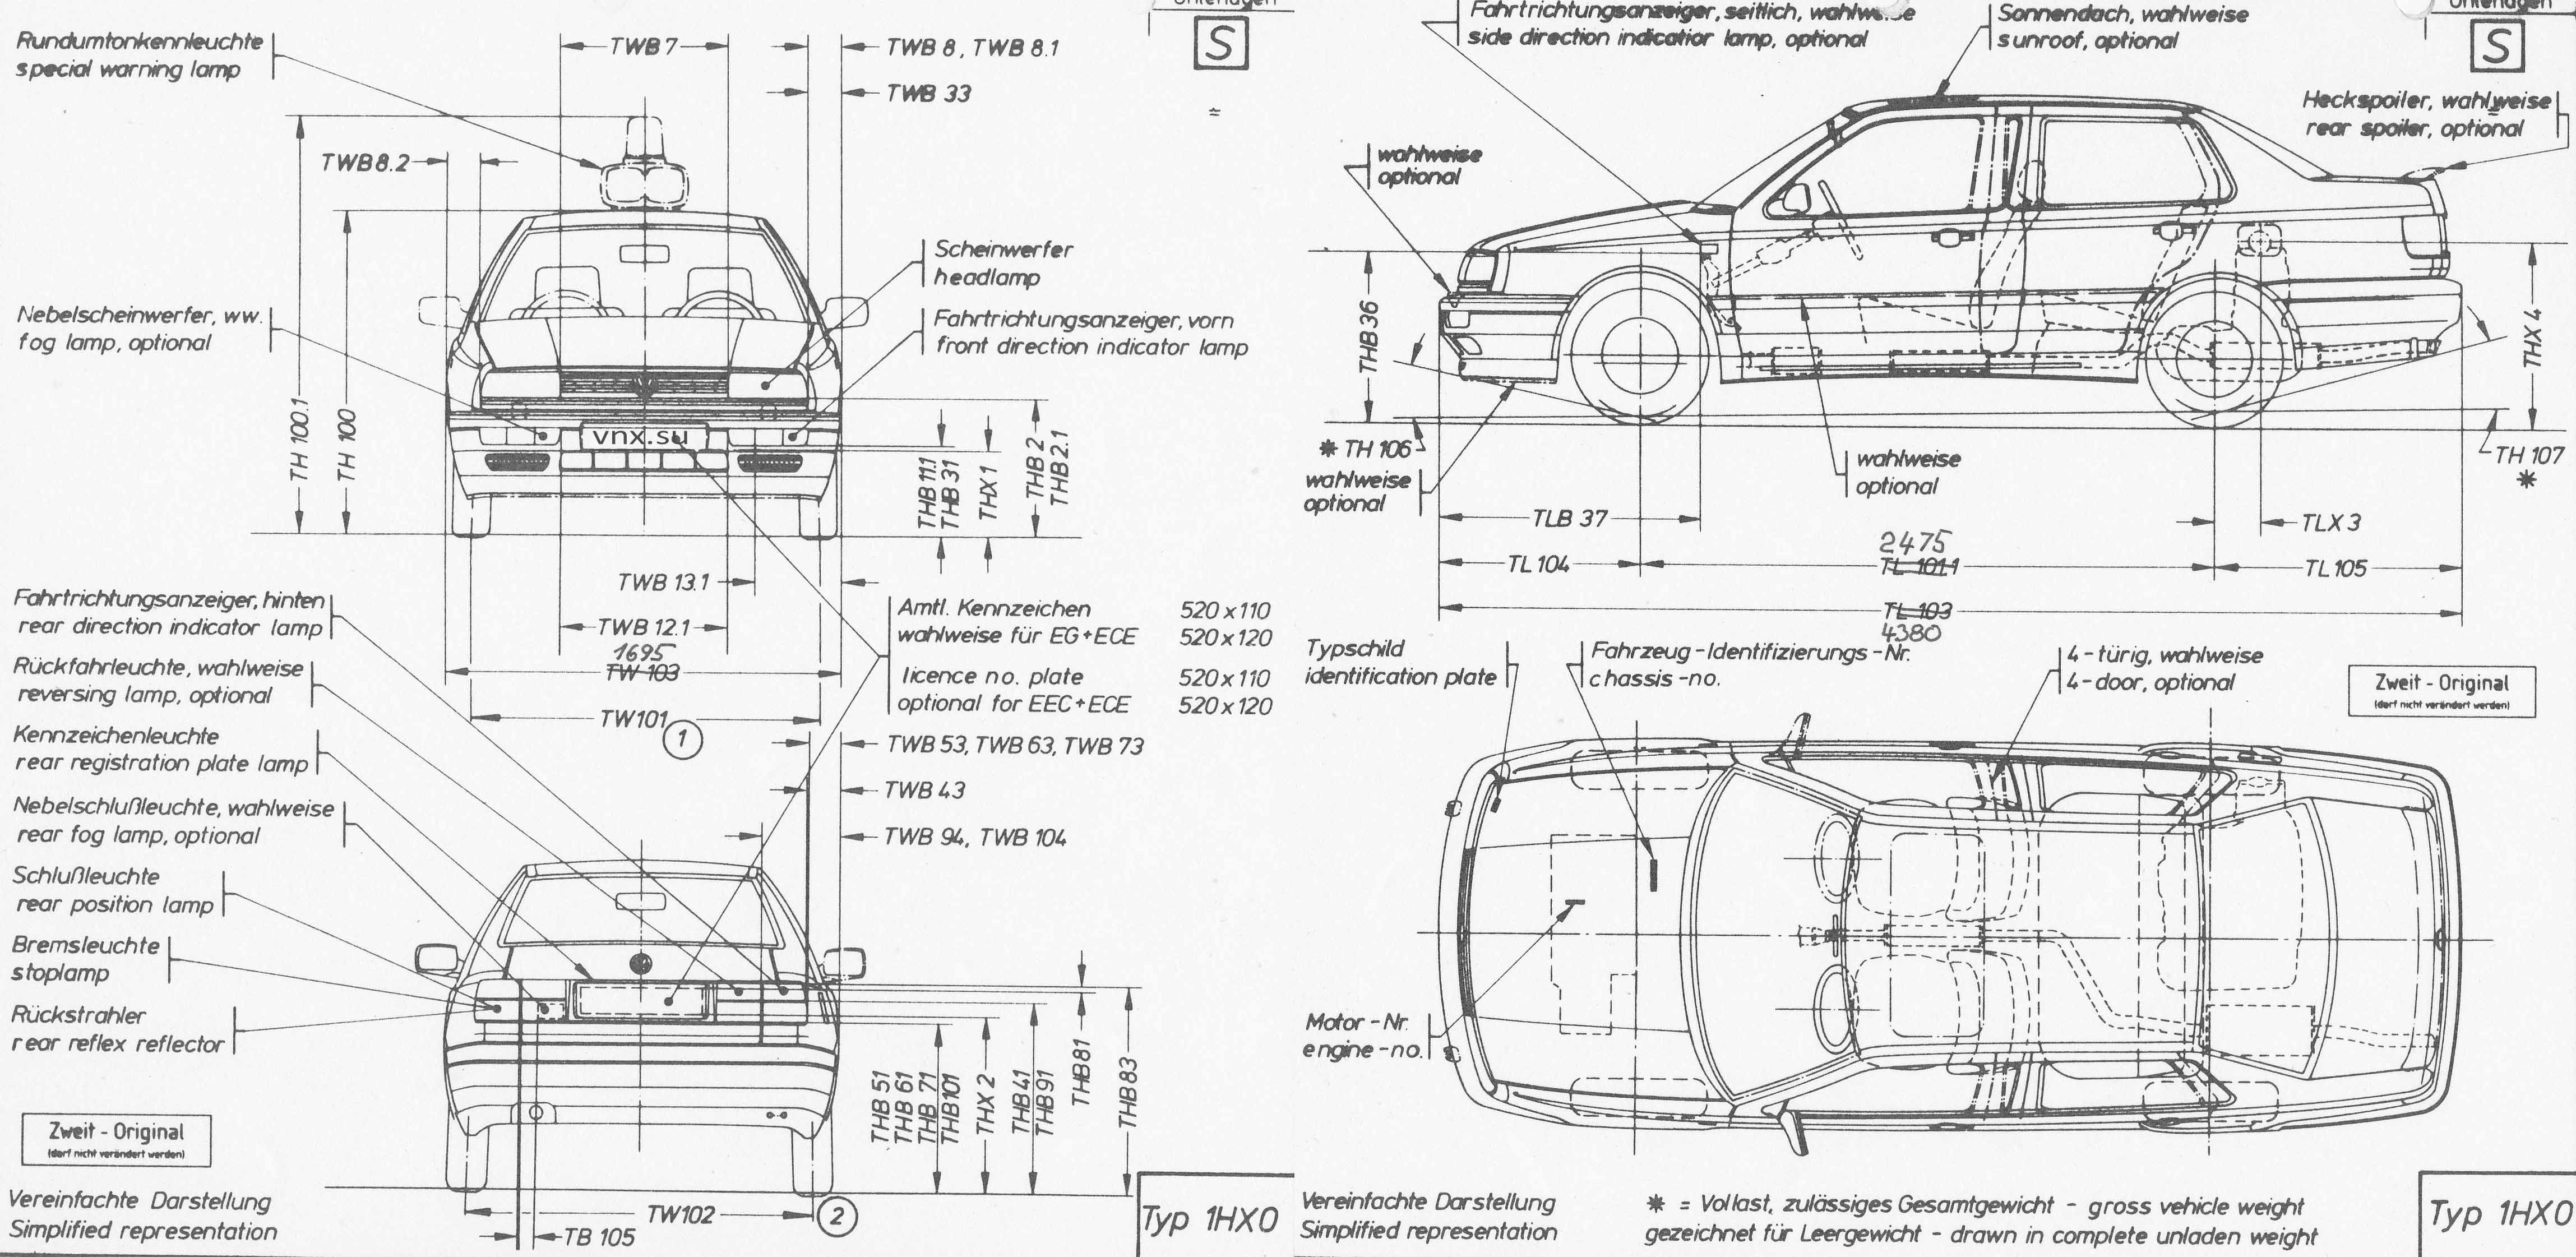 Габаритные размеры Фольксваген Венто 1991-1997 (dimensions VW Vento)